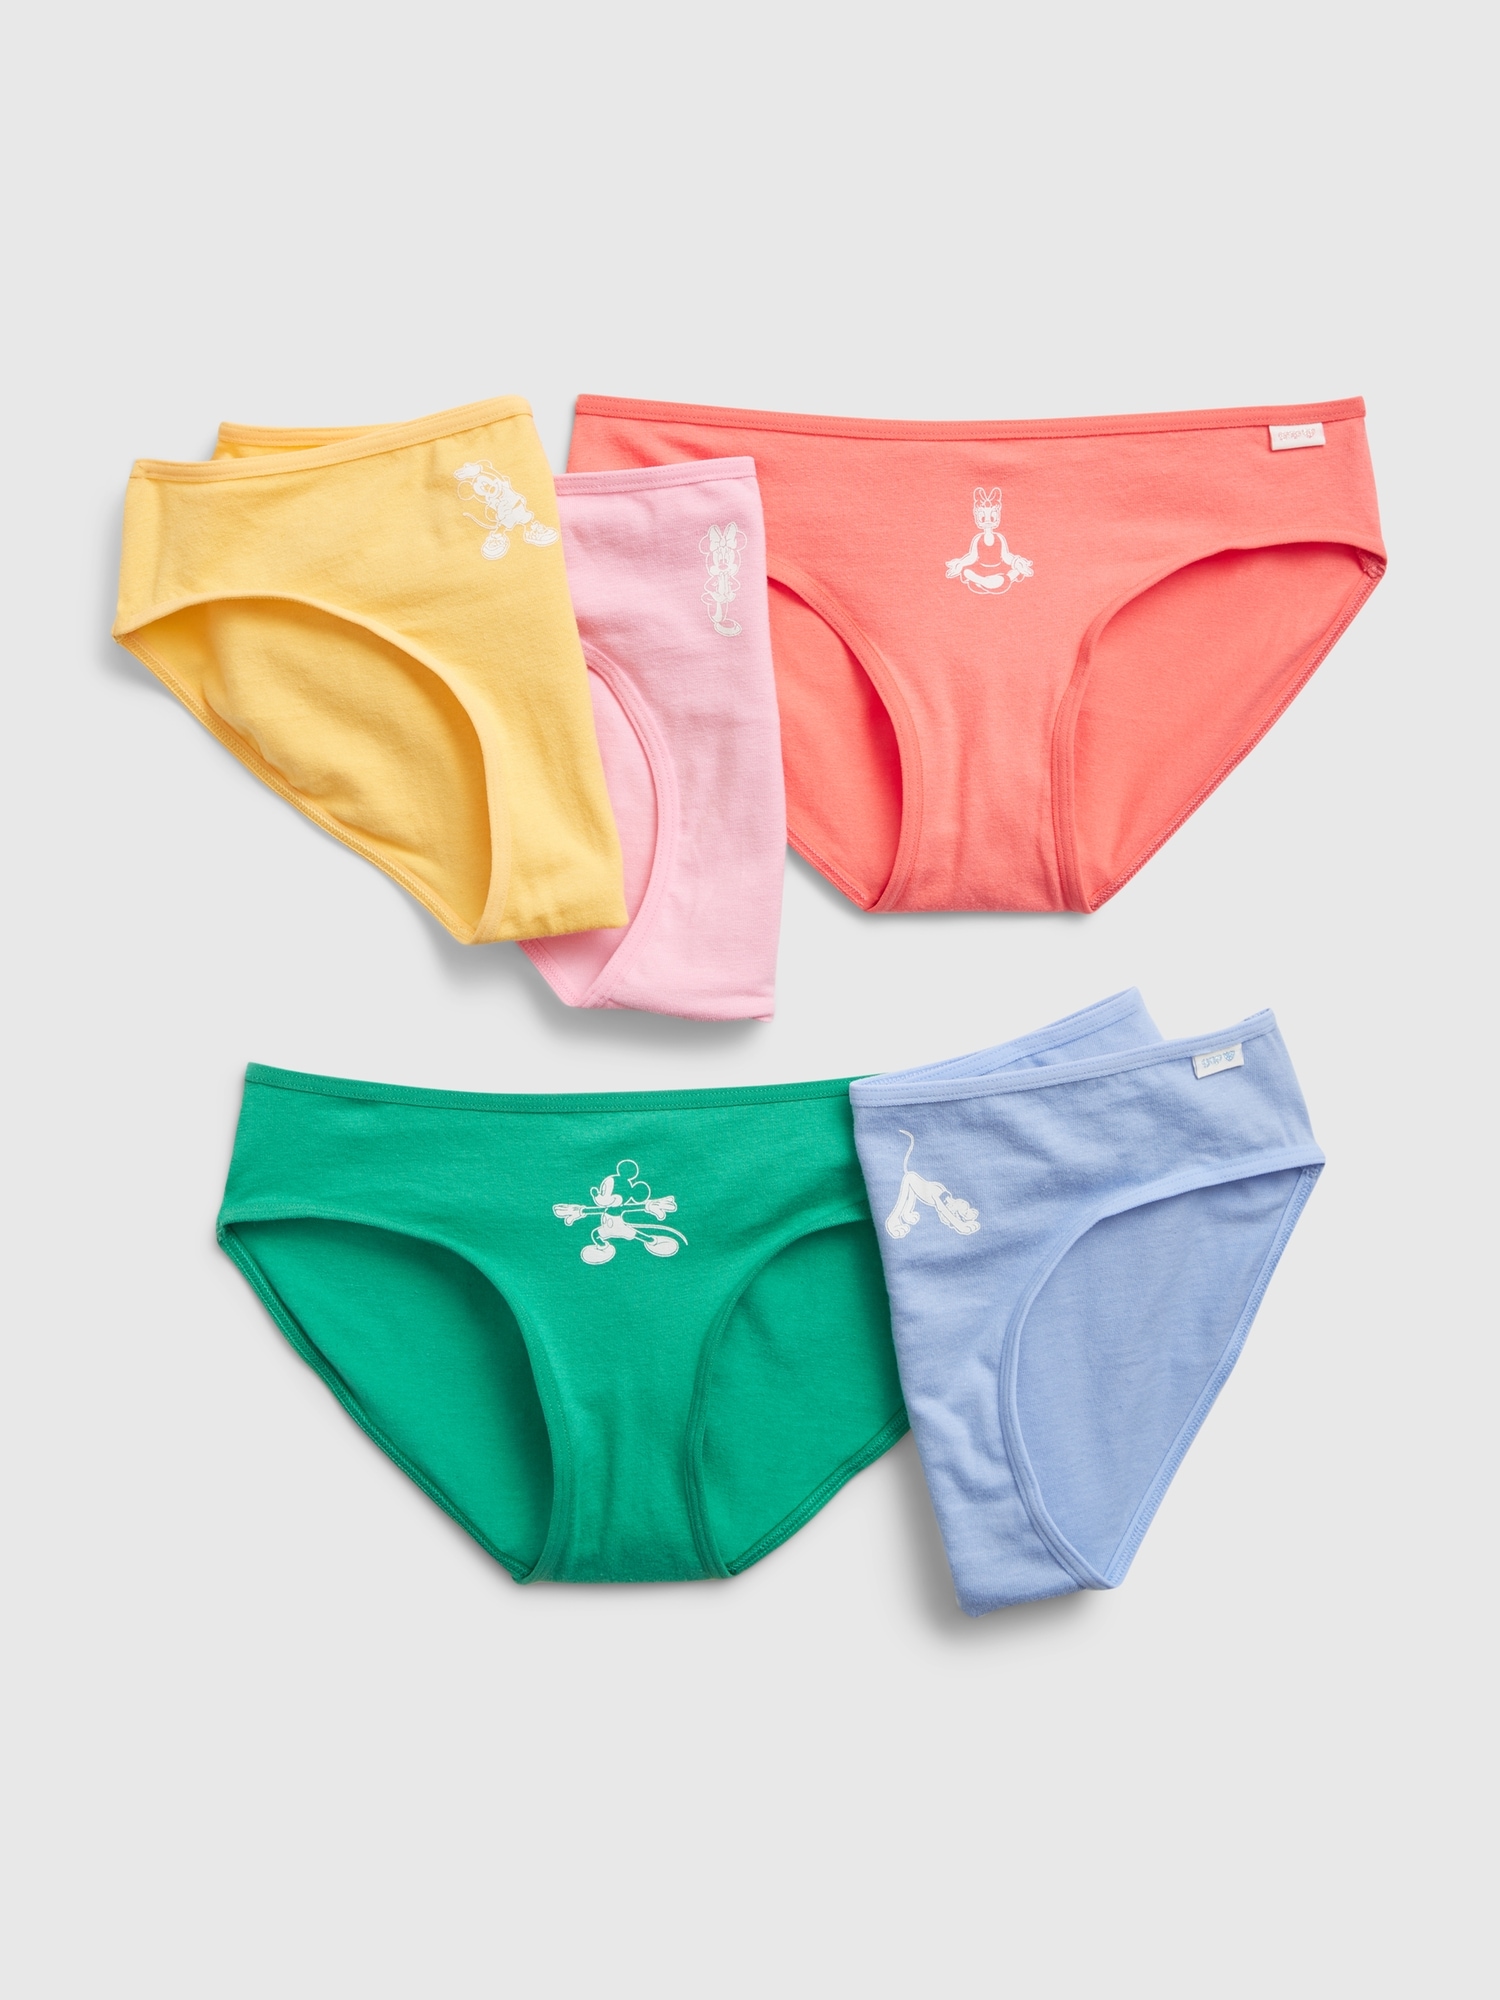 GAP unisex baby Briefs Bikini Style Underwear, Multi, 2-3T US at   Women's Clothing store